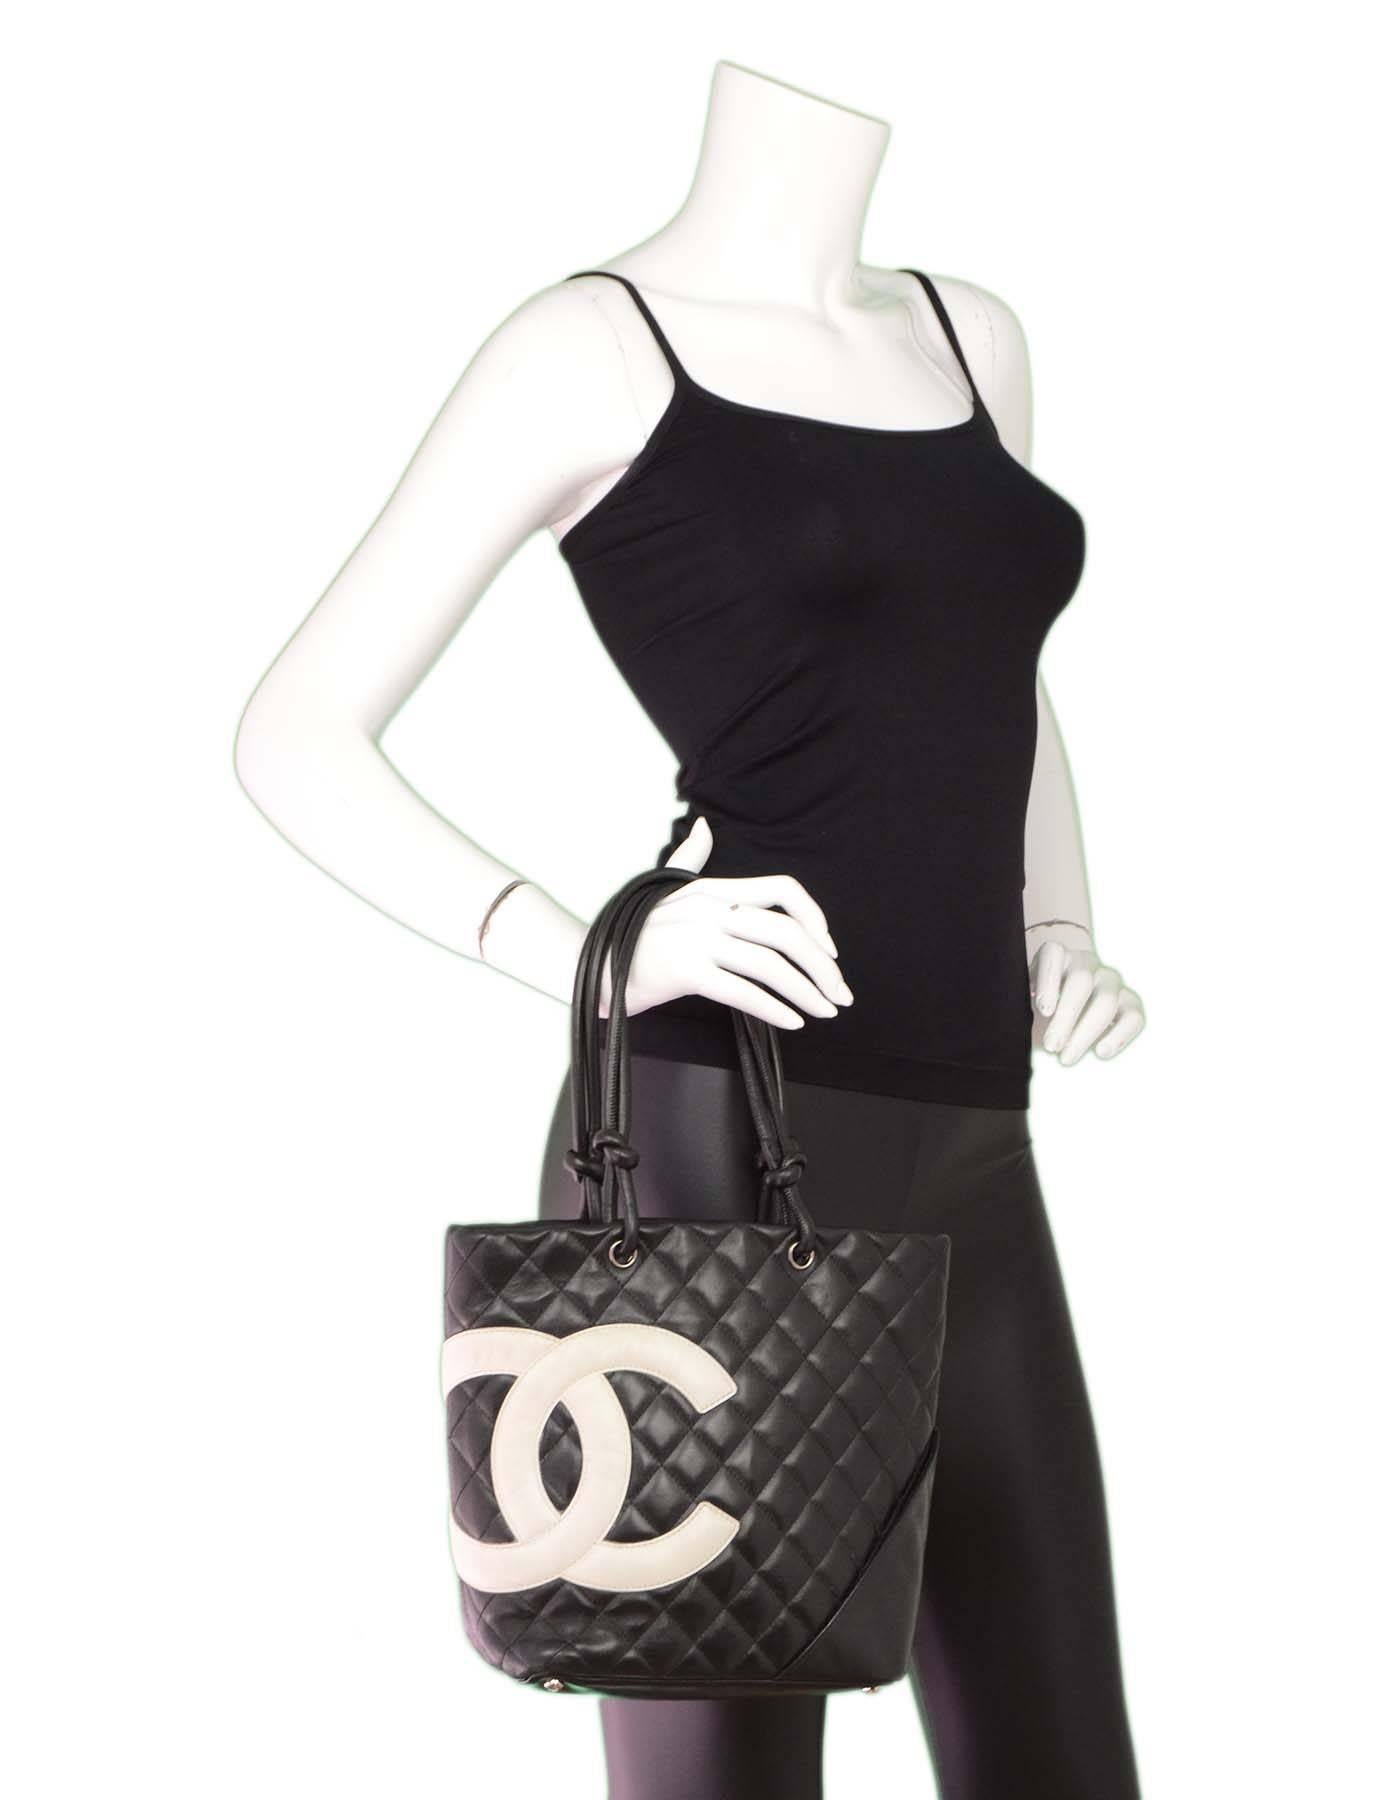 Chanel Black & White Leather Cambon Tote Bag SHW 6